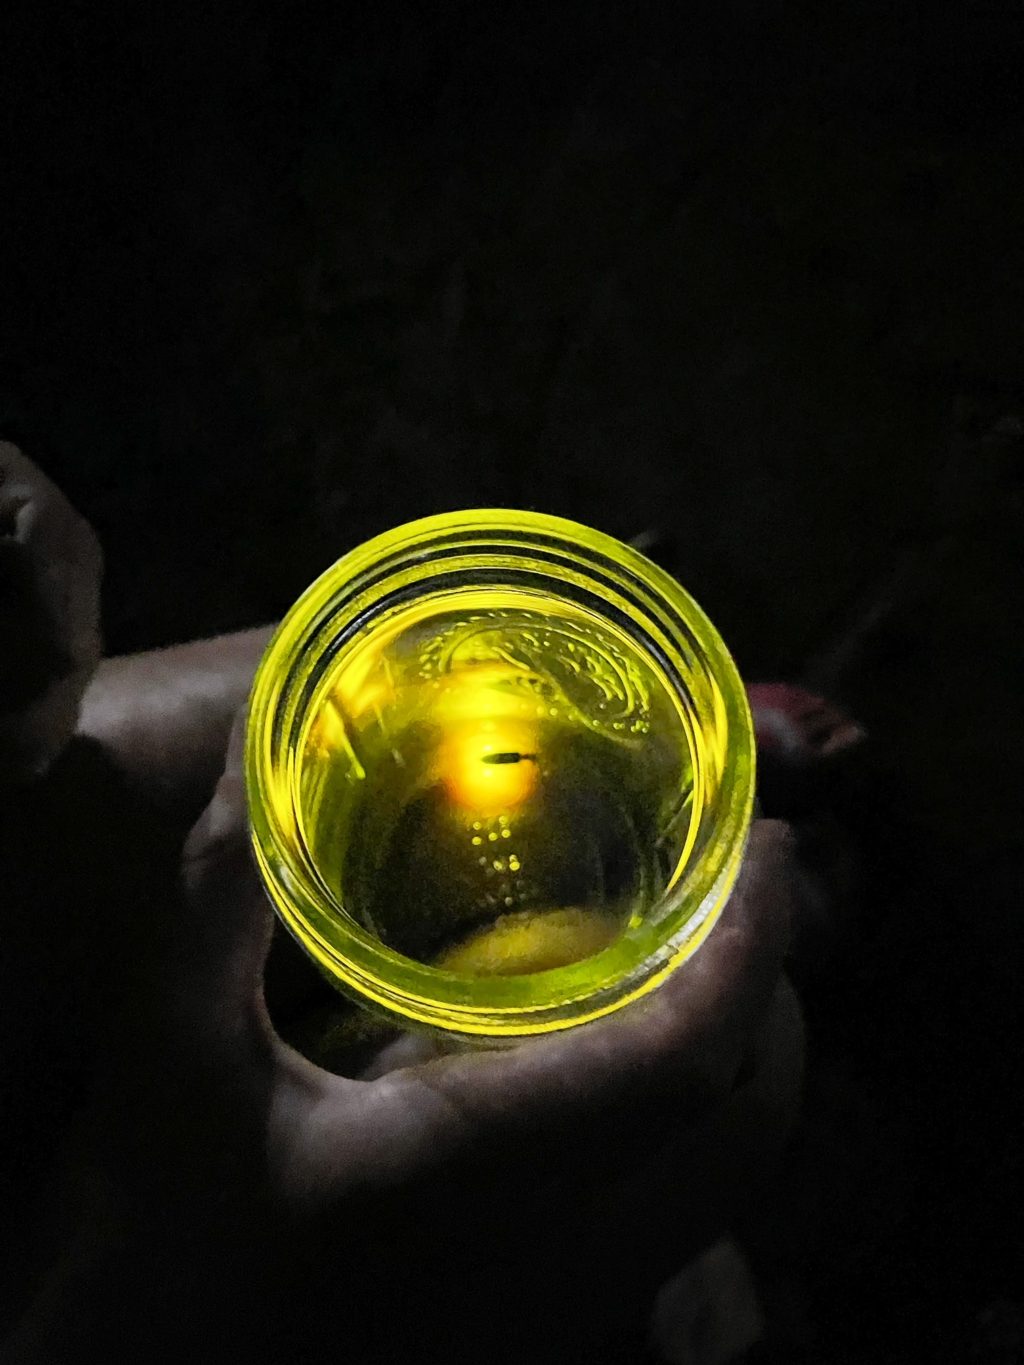 fireflies in a mason jar at night